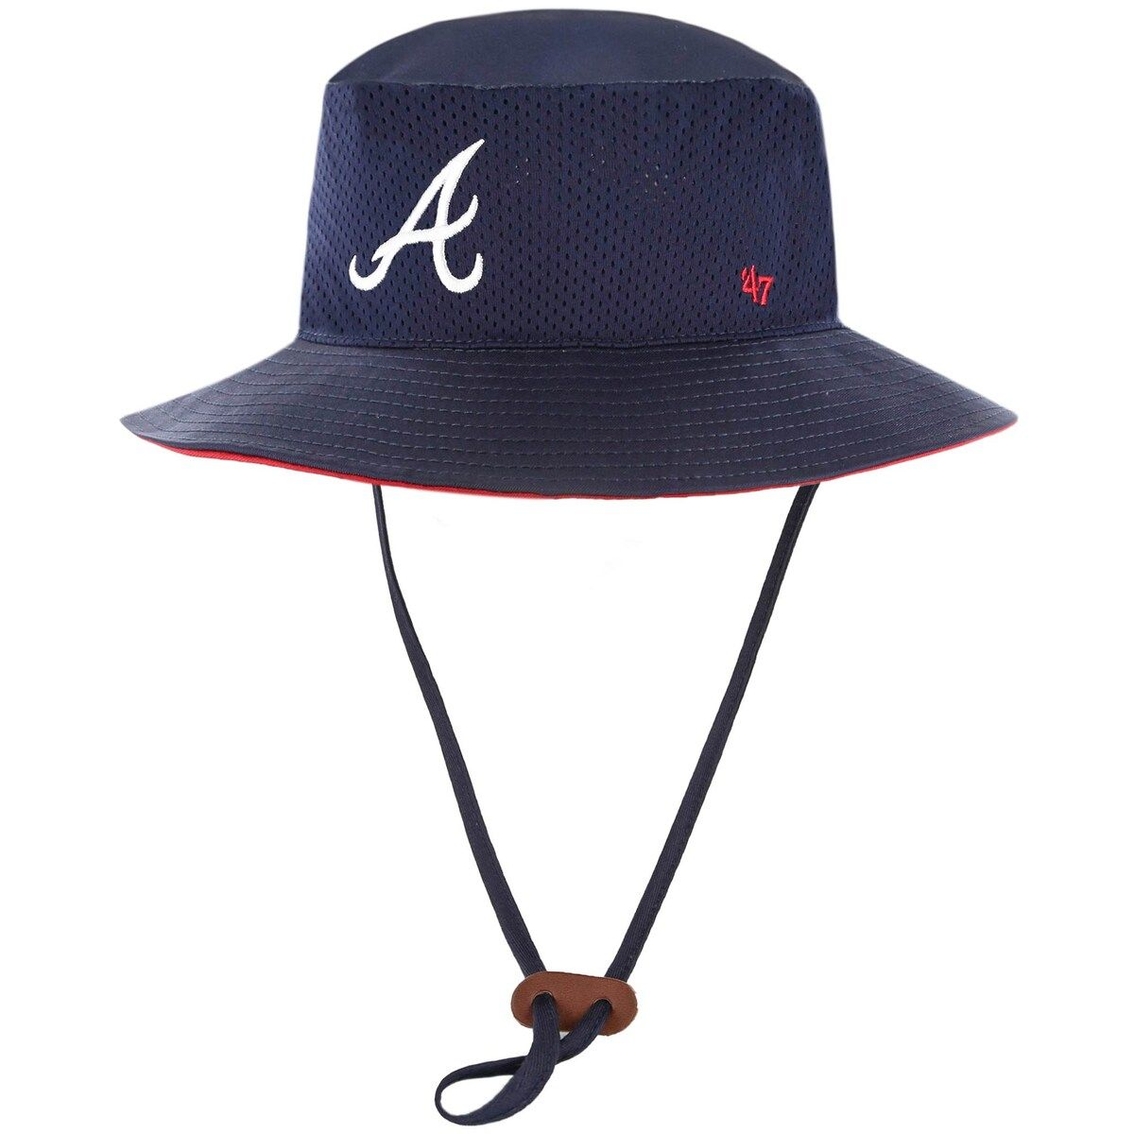 '47 Men's Navy Atlanta Braves Panama Pail Bucket Hat - Image 2 of 3